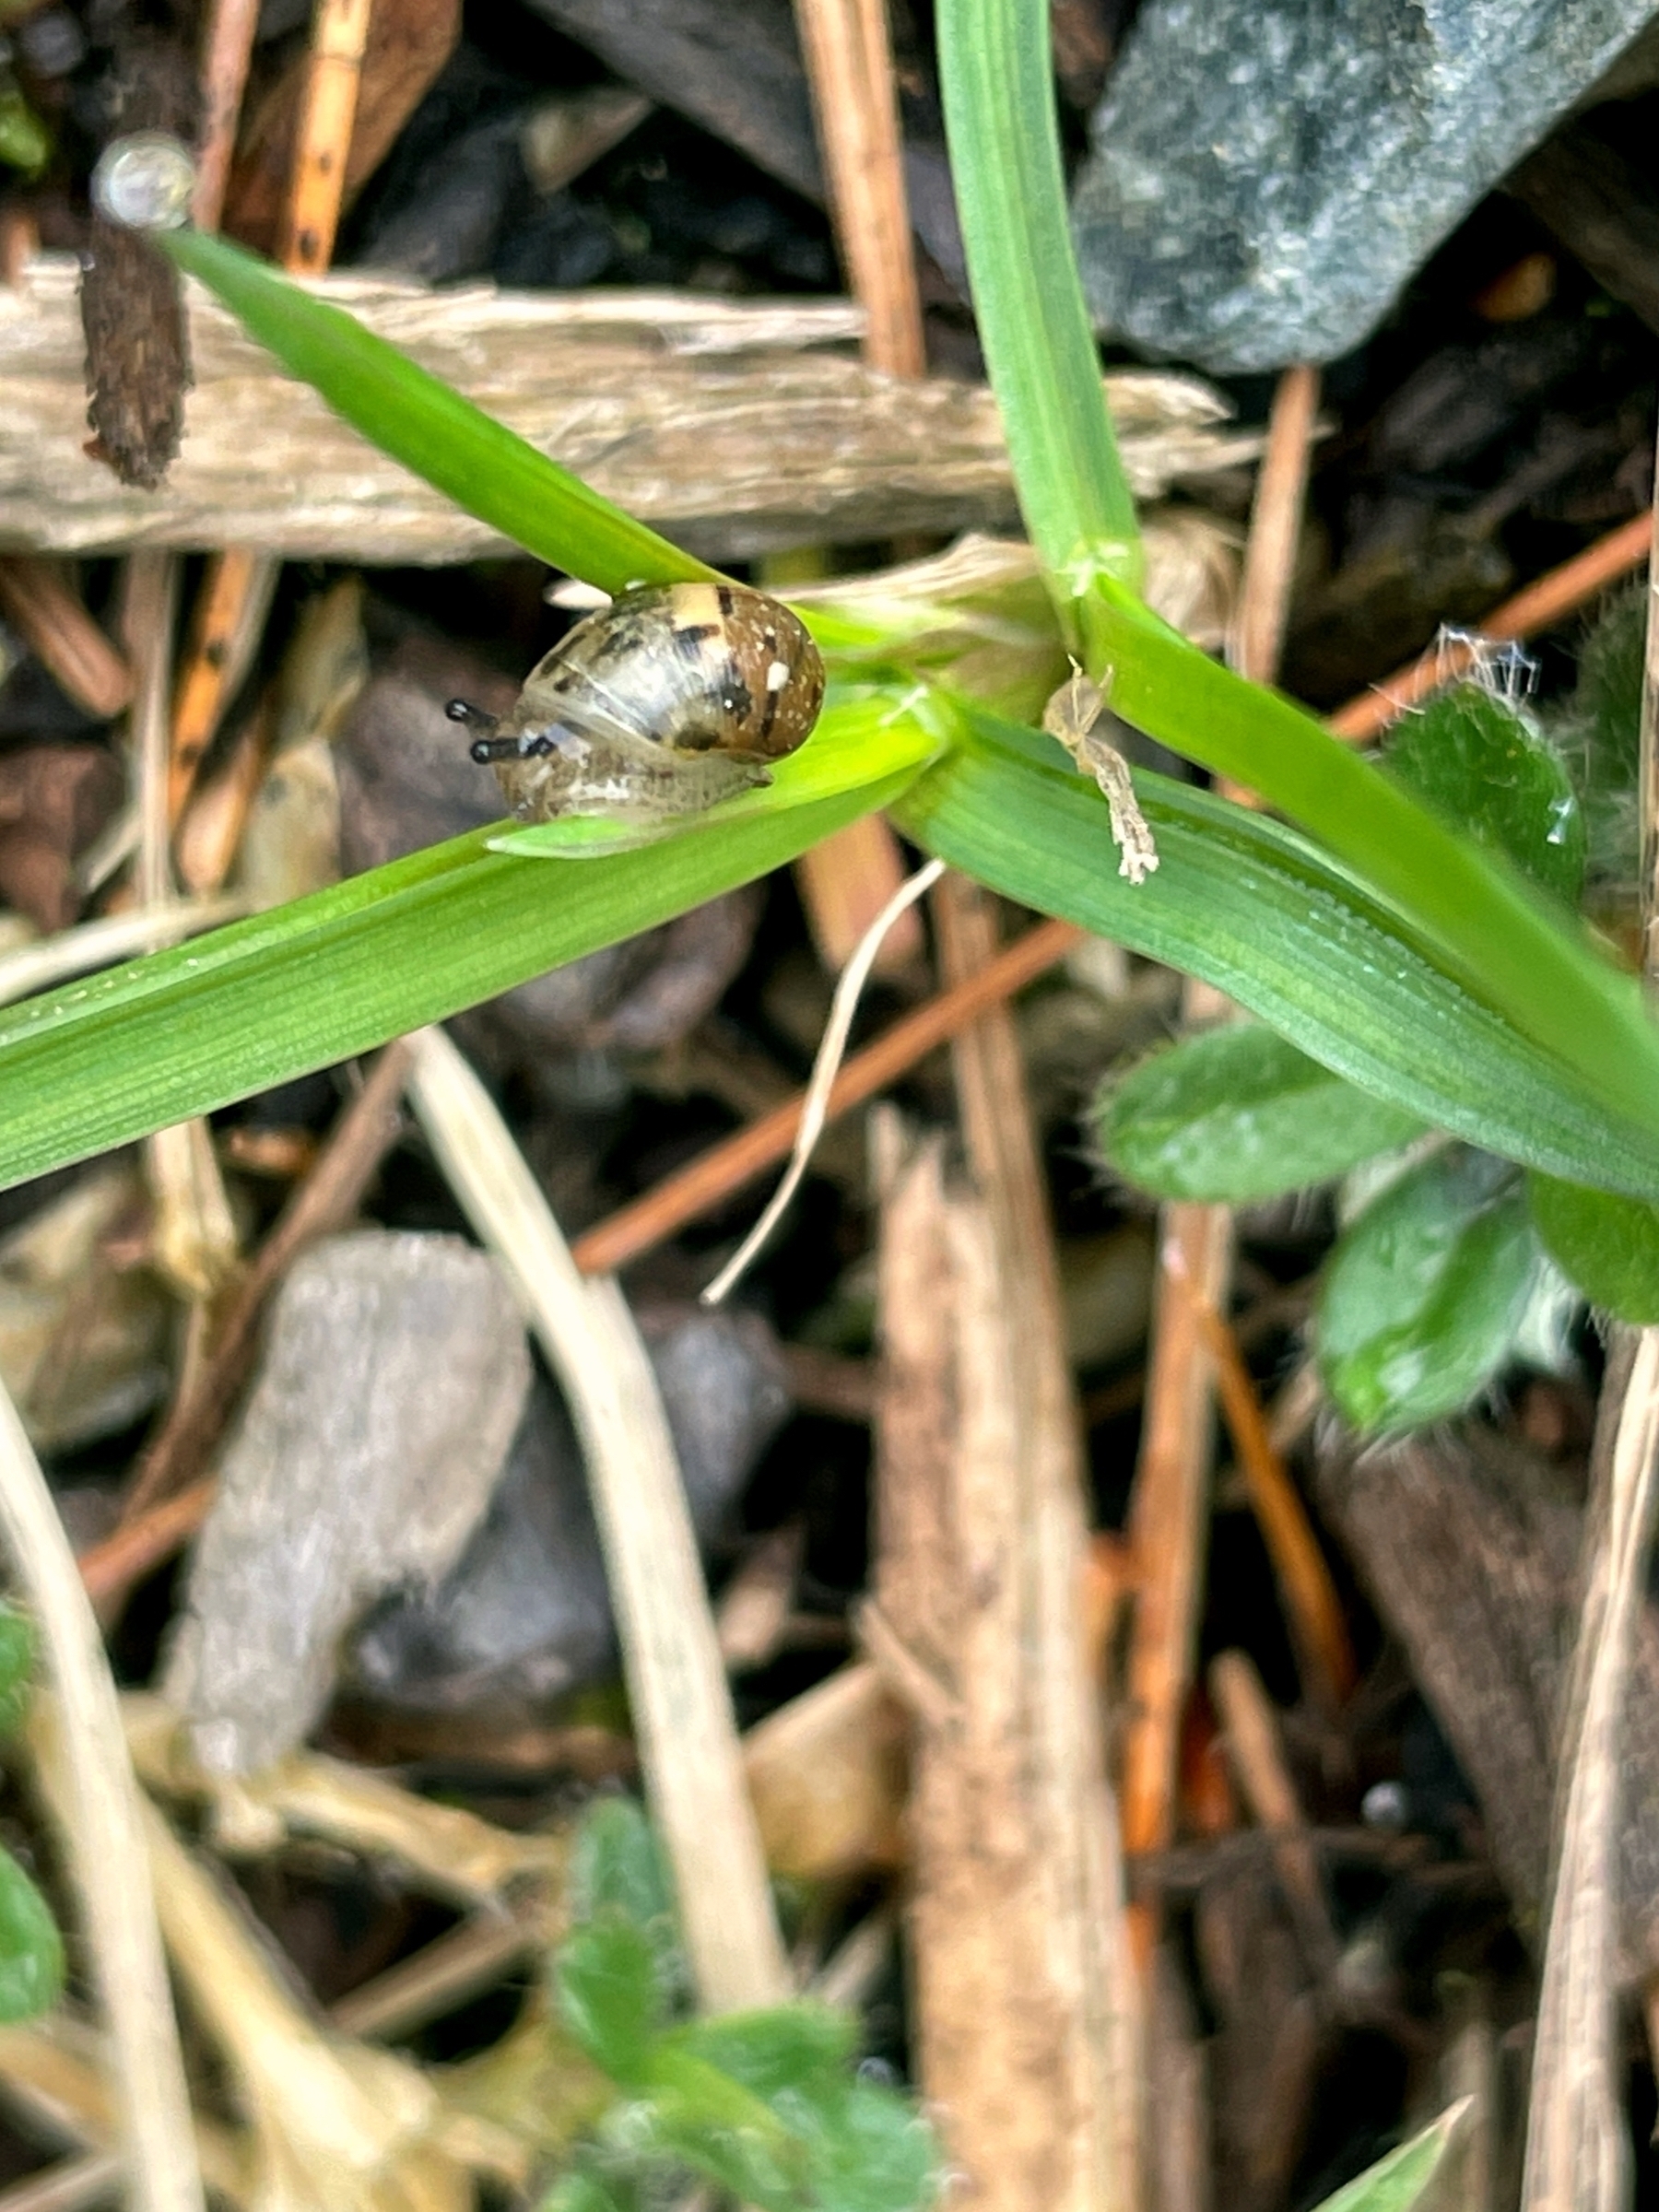 Tiny snail on a blade of grass